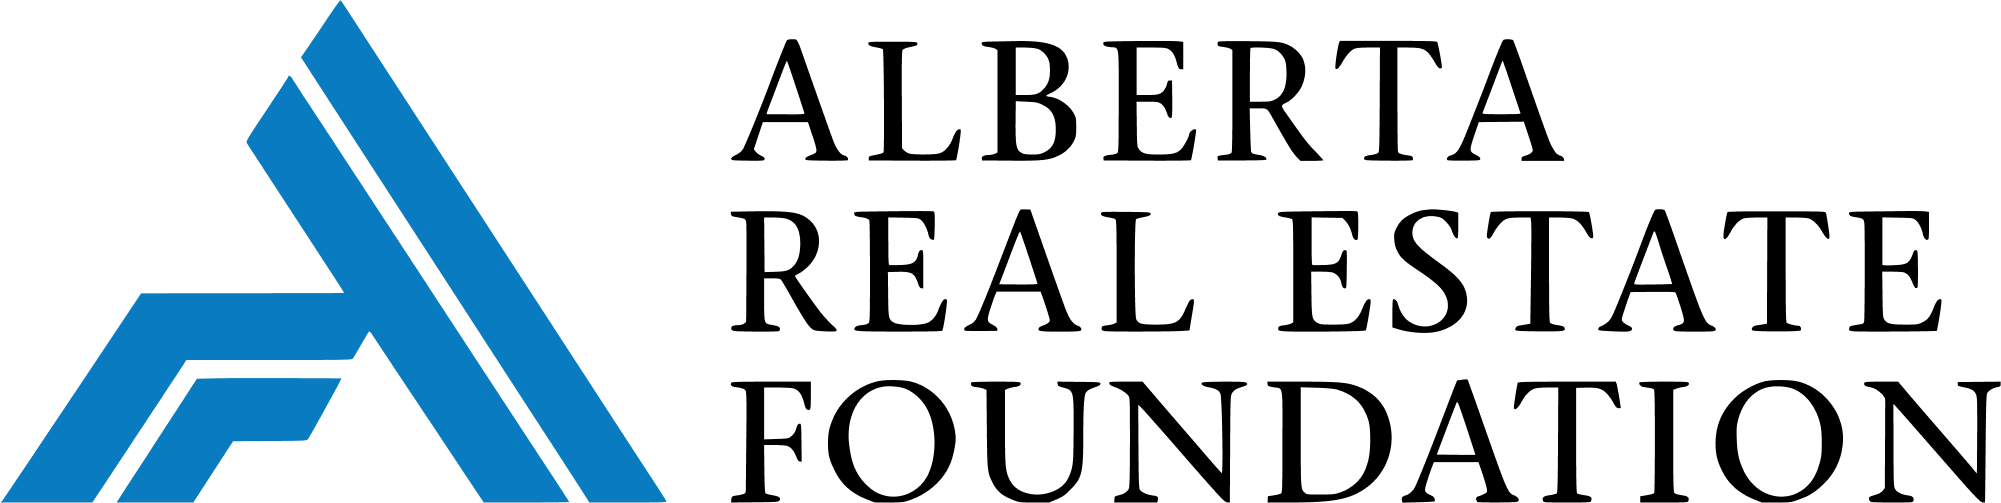 Alberta Real Estate Foundation logo on transparent background